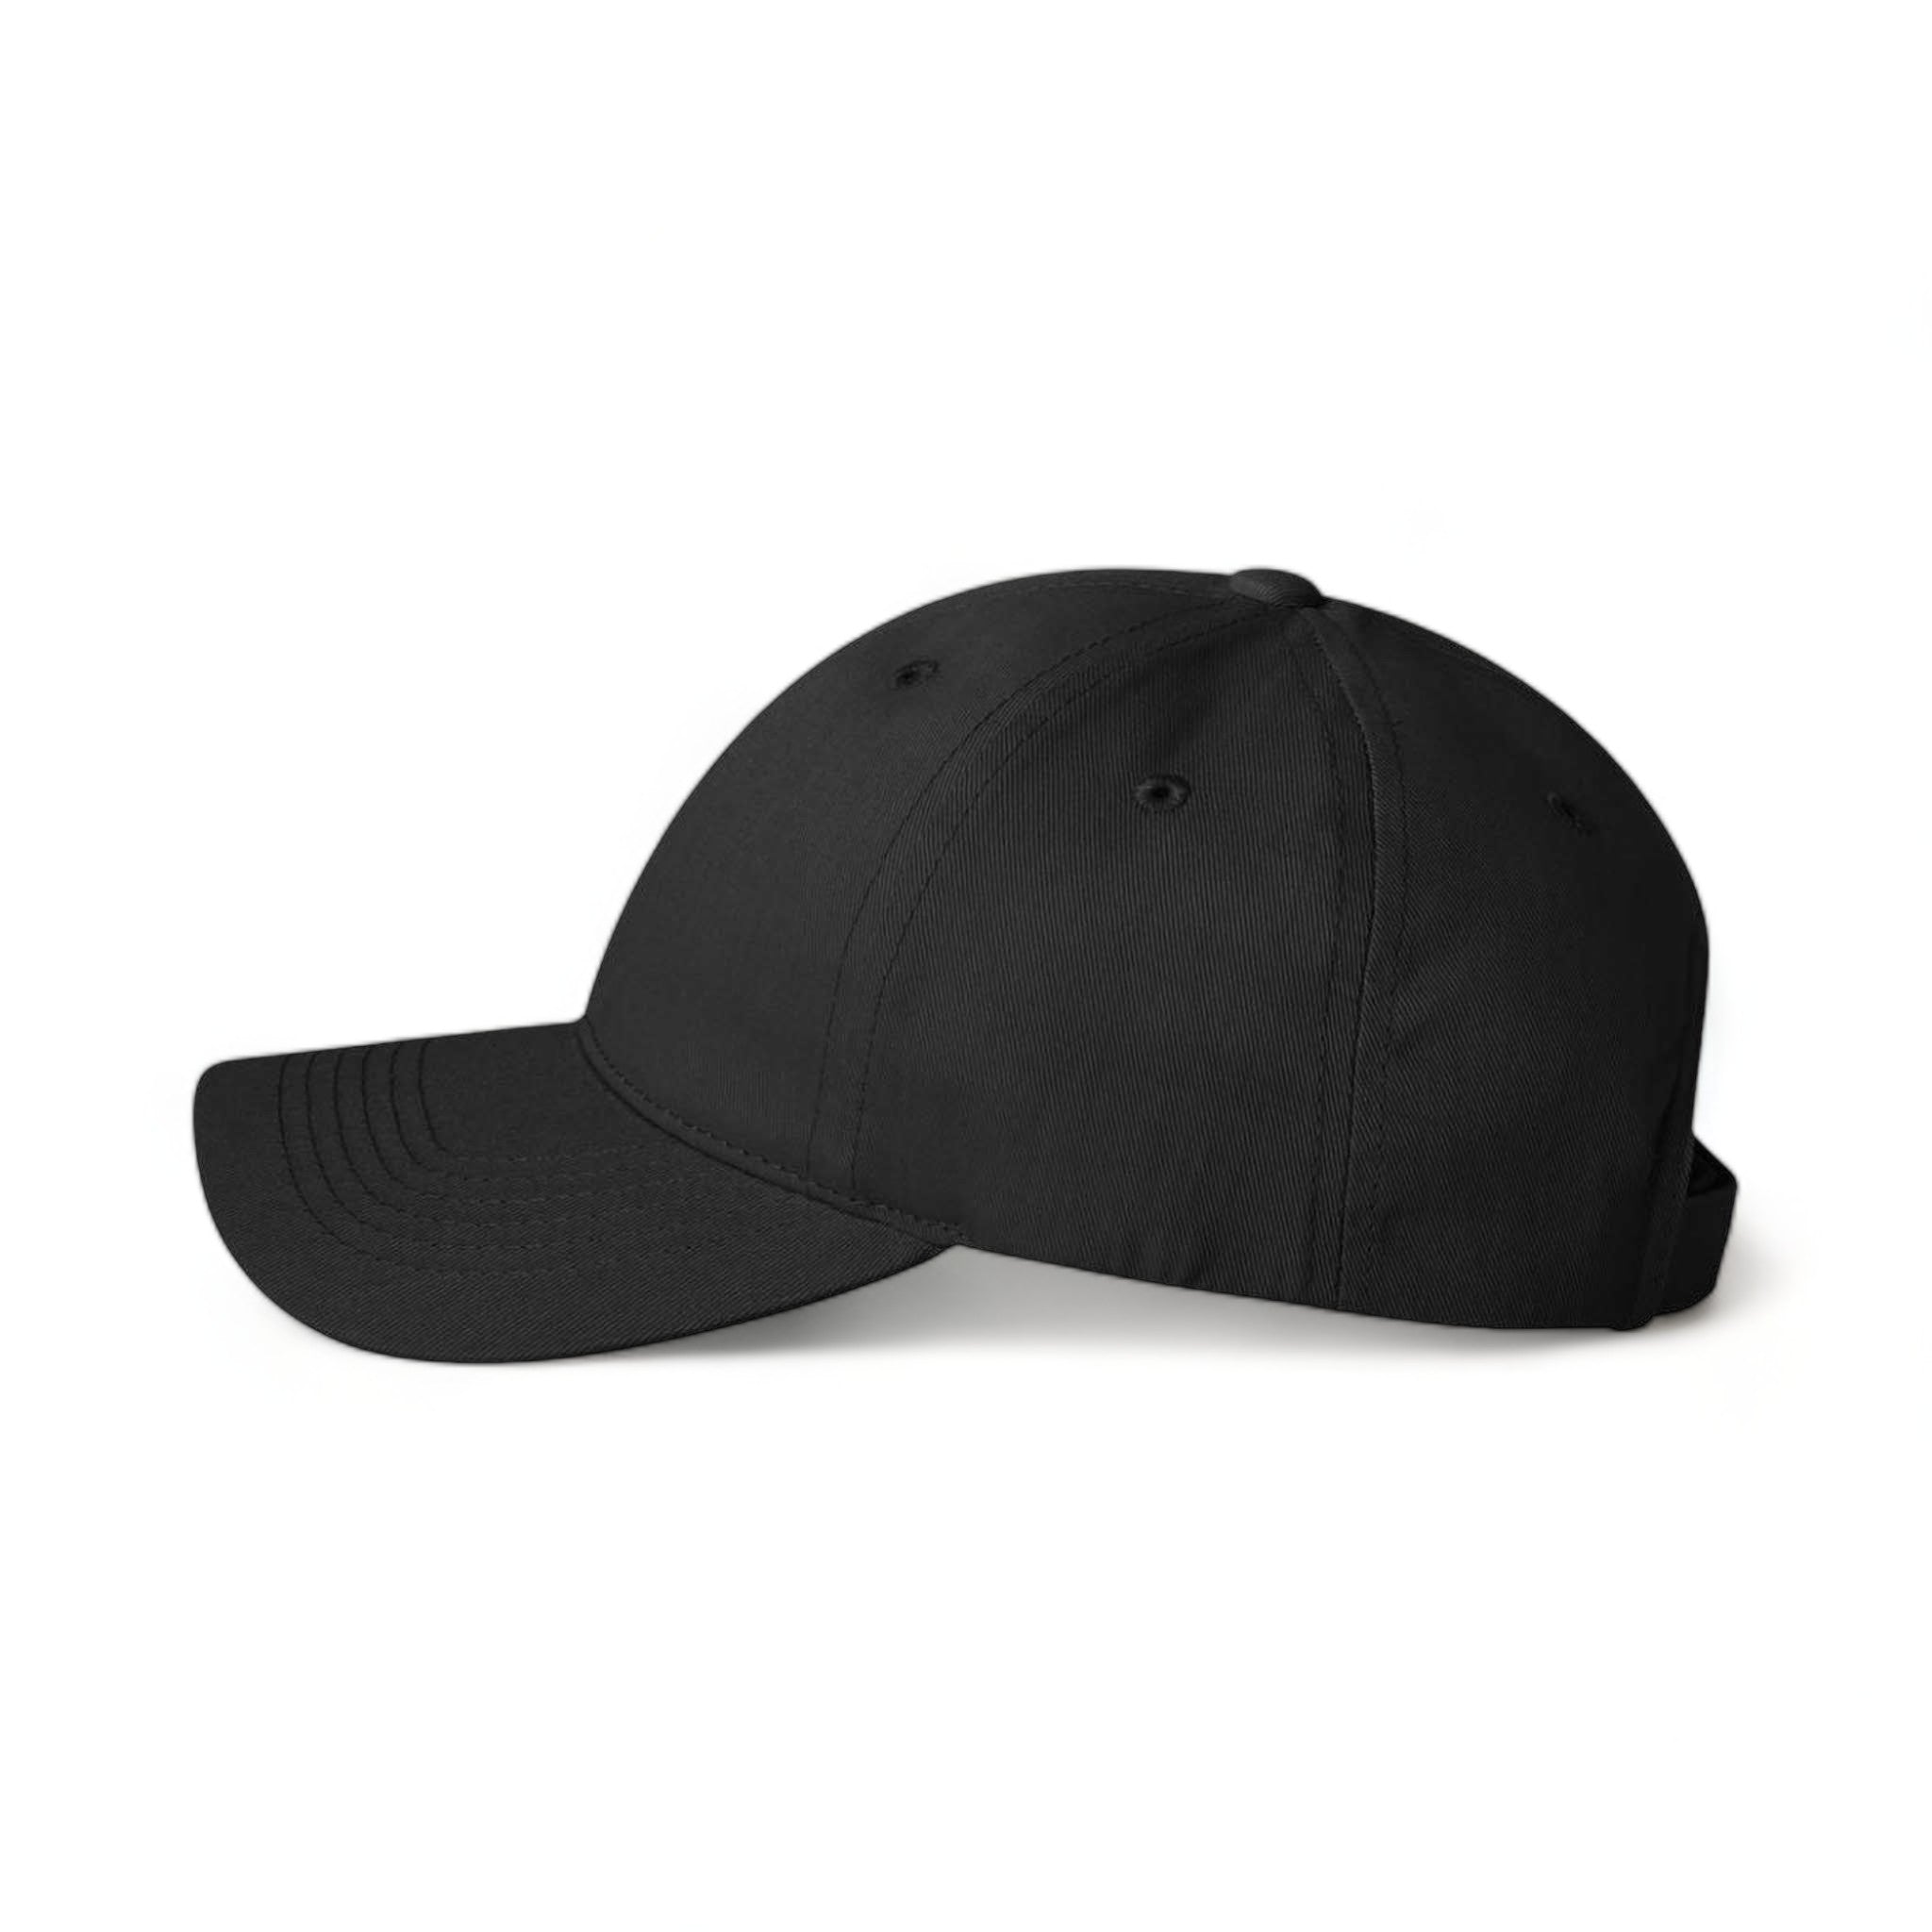 Side view of Sportsman 2260 custom hat in black